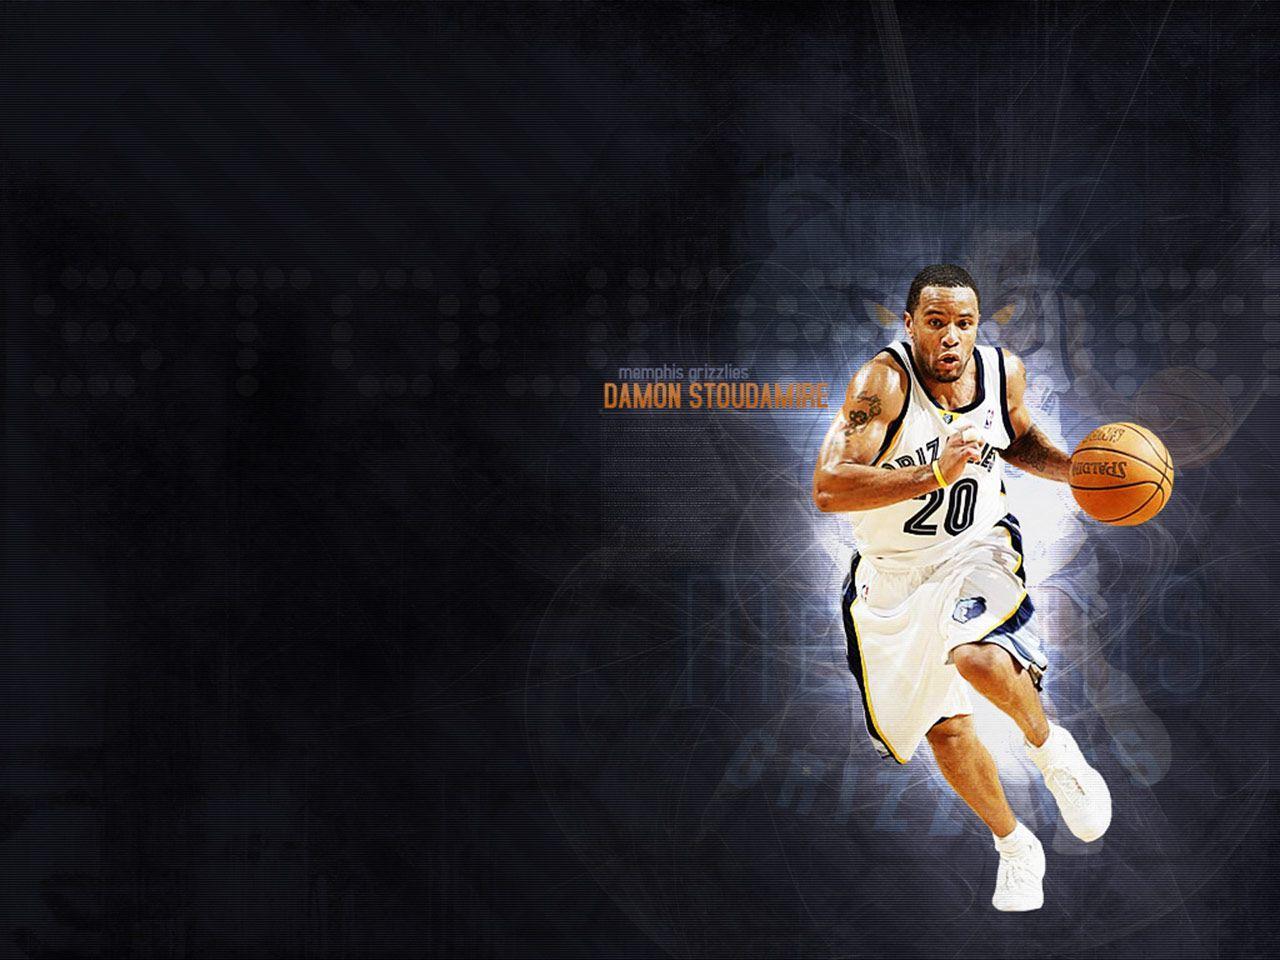 Damon Stoudamire Grizzlies Wallpaper. Basketball Wallpaper at